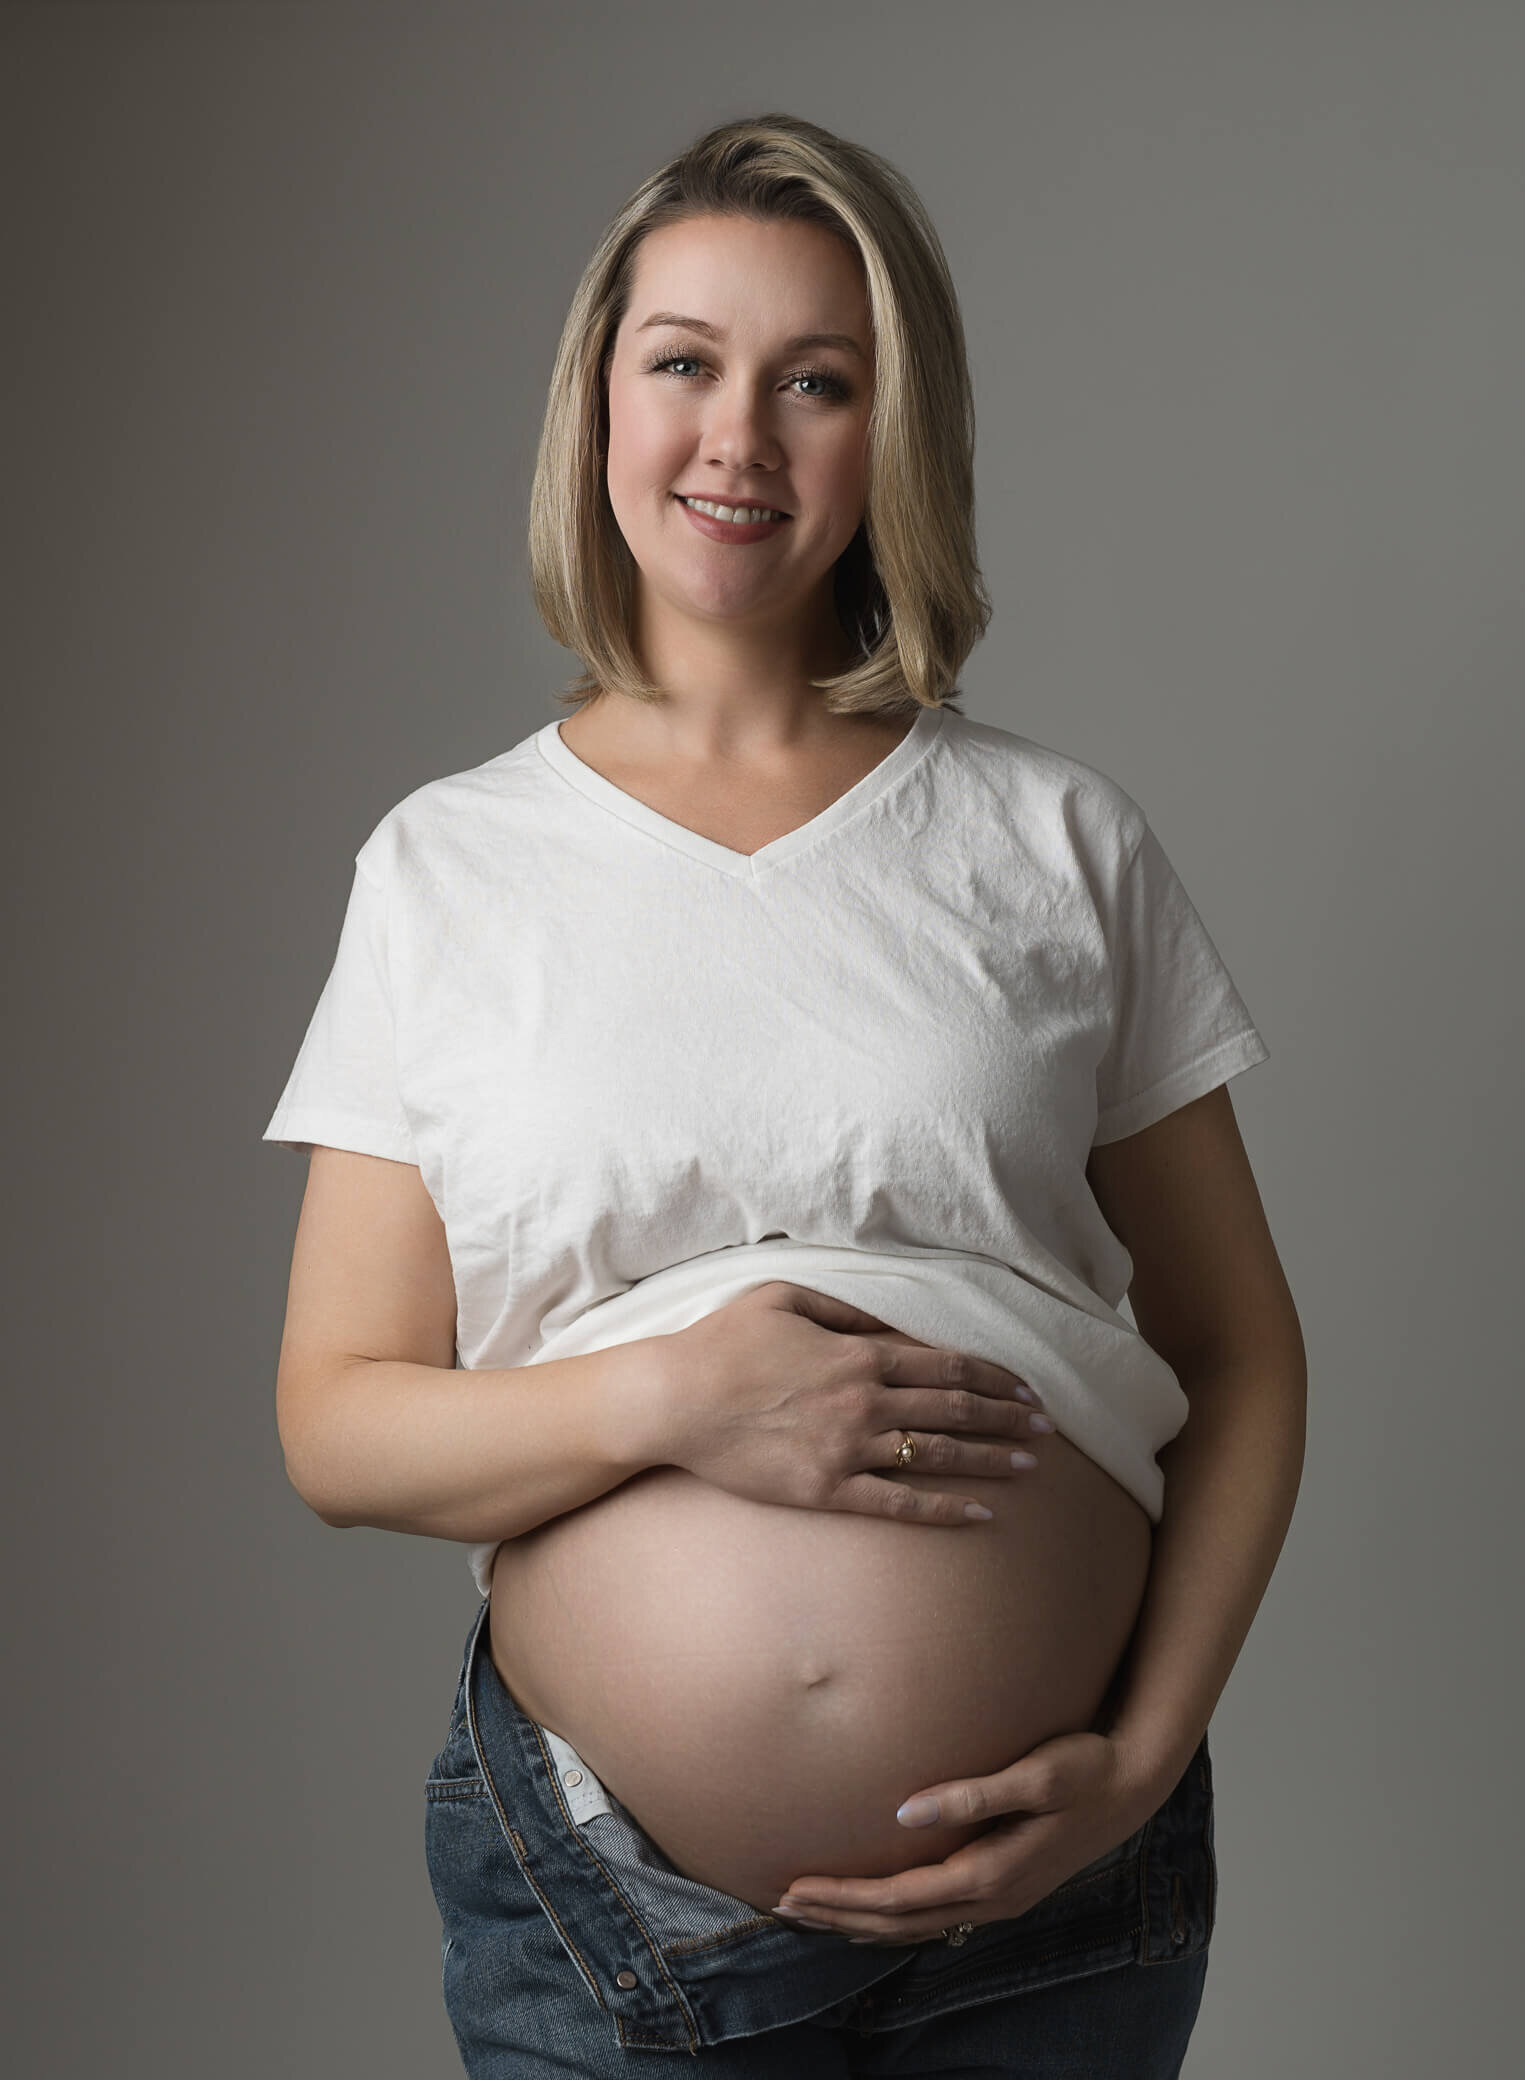 photo in studio, pregnant mom wearing jeans